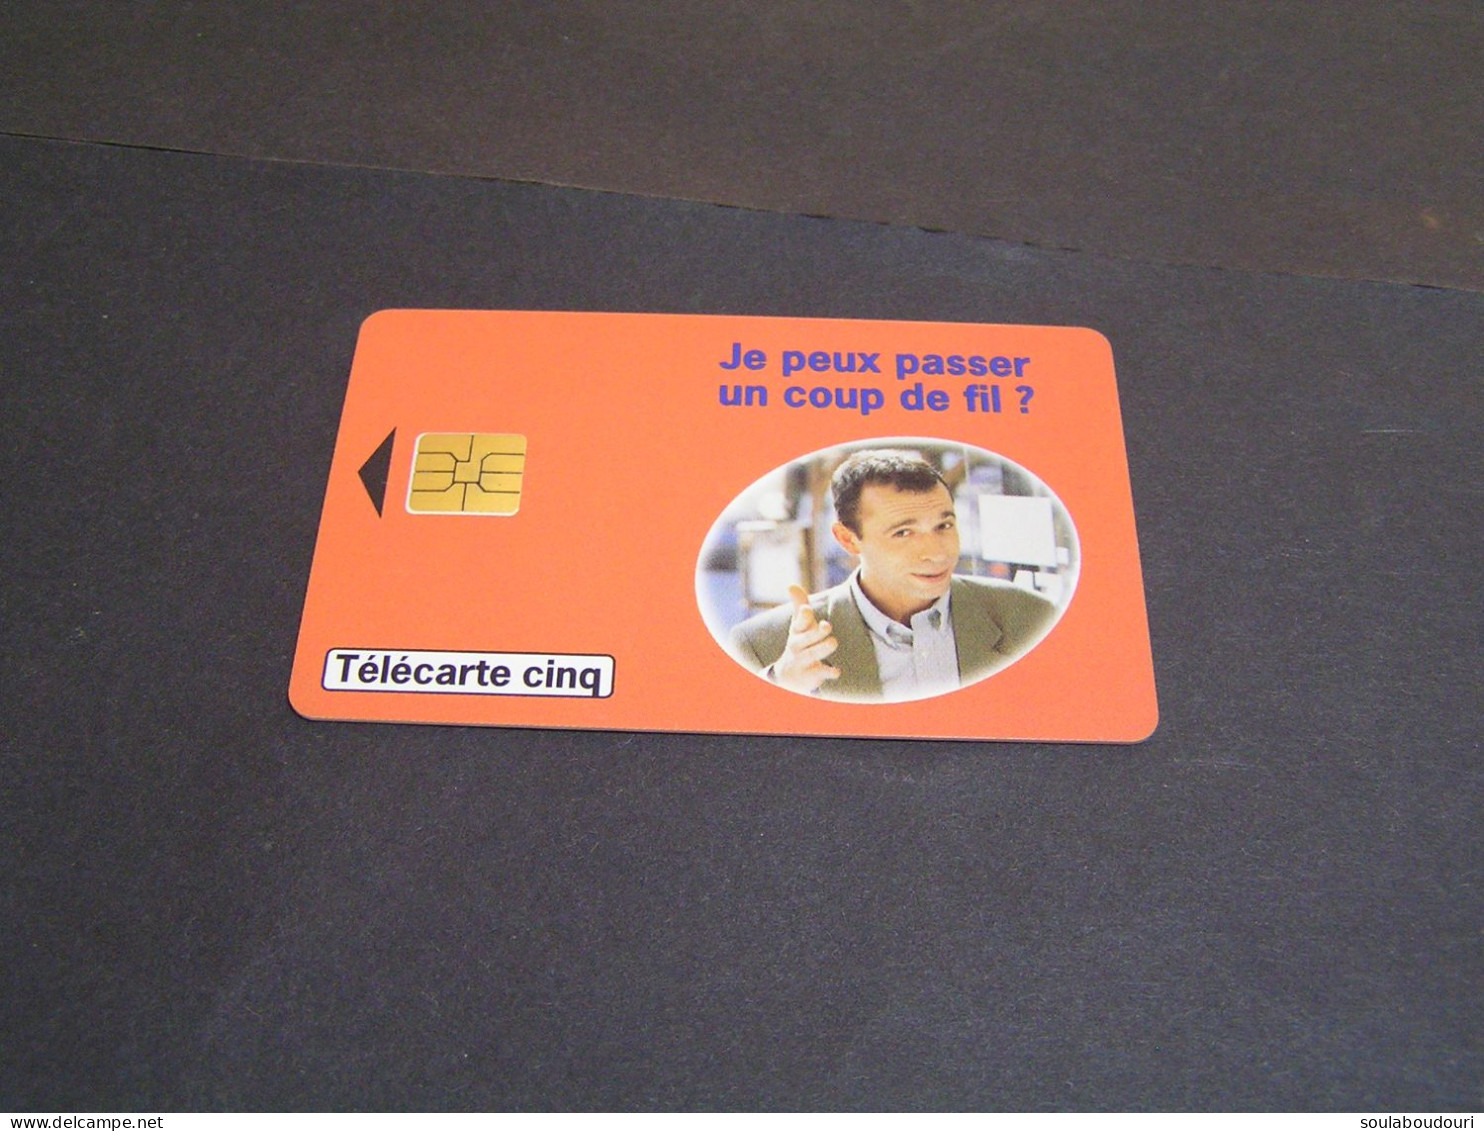 FRANCE Phonecards Private Tirage .102.000 Ex 05/97... - 5 Unità